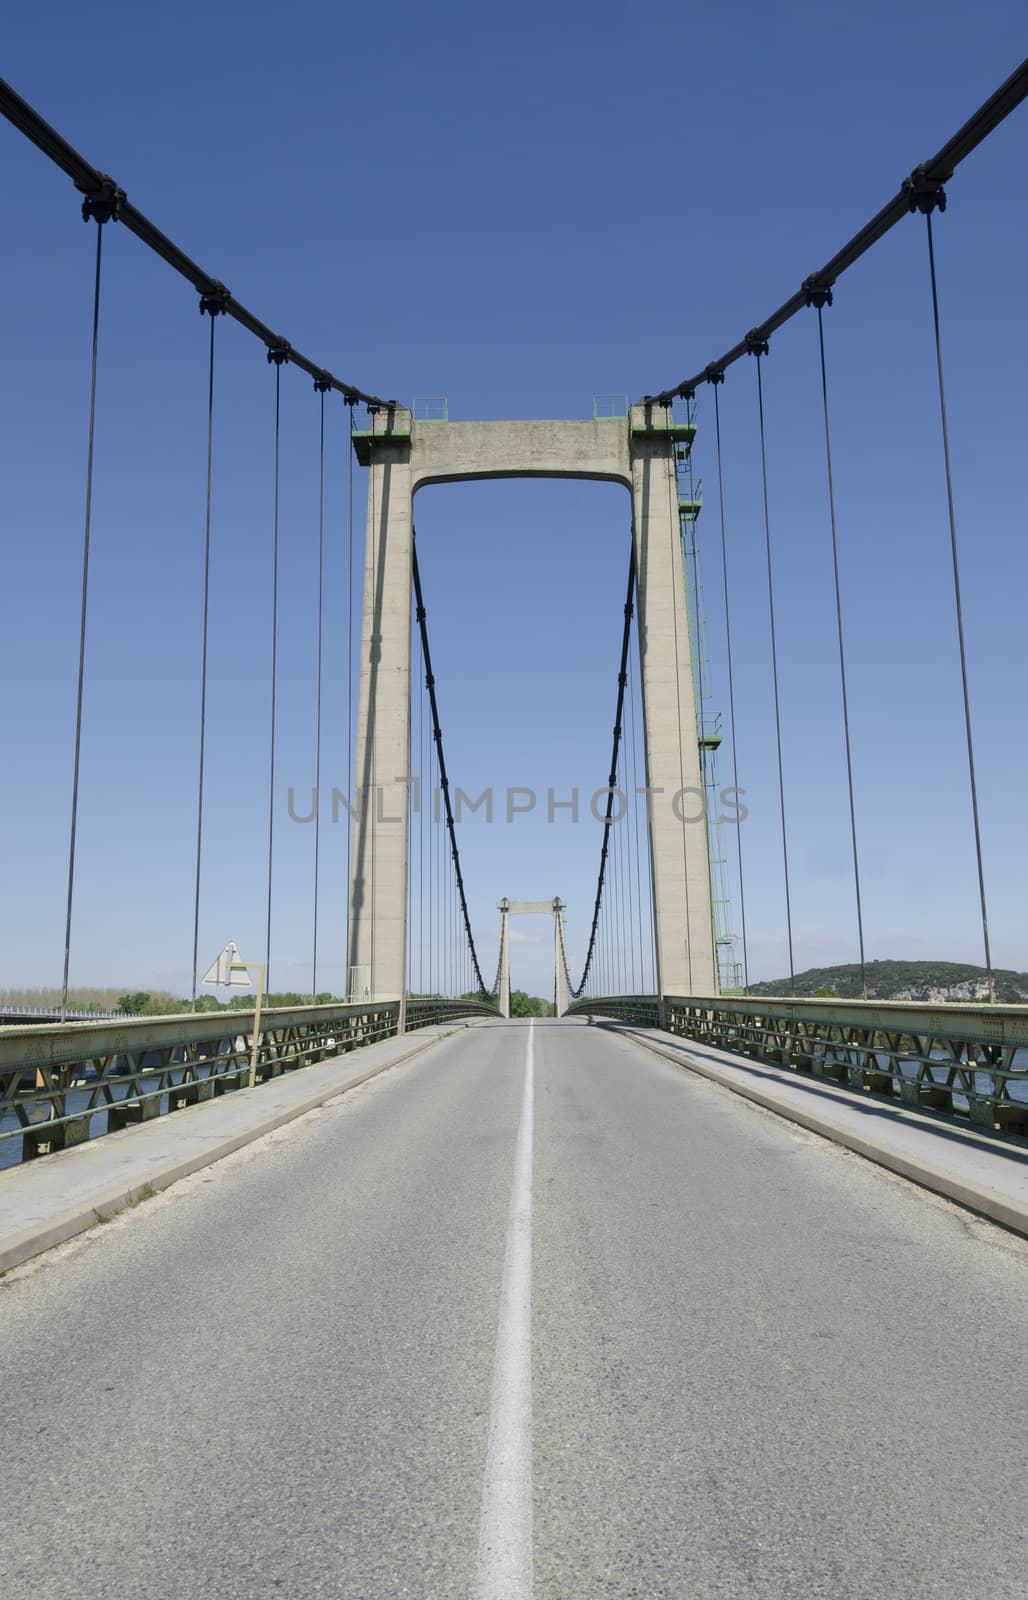 suspended bridge on a blue sky